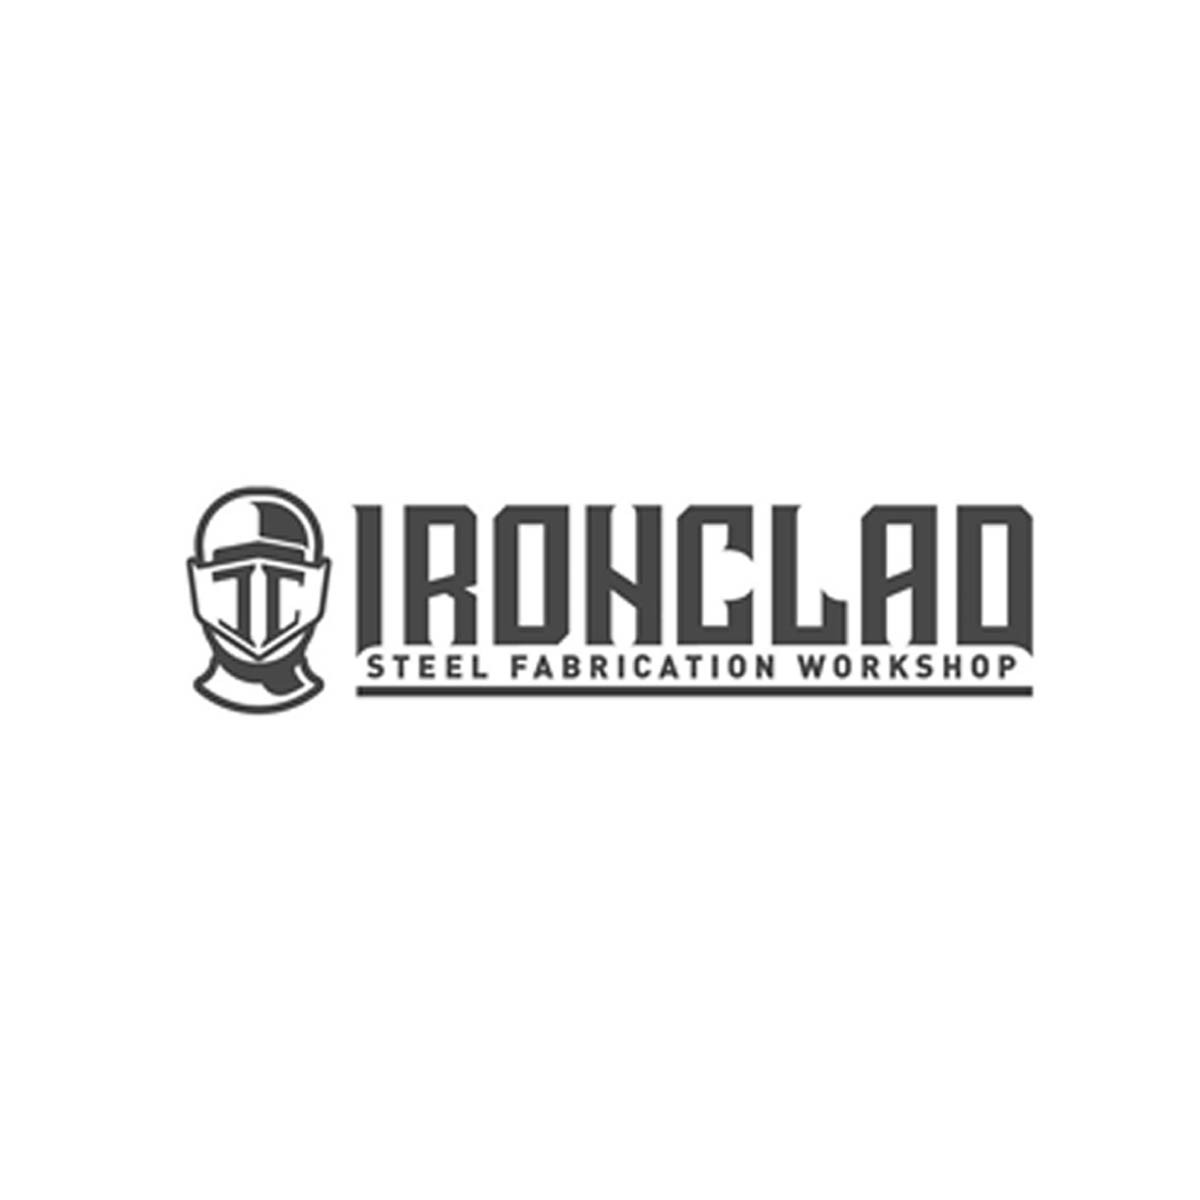 Ironclad Steel Fabrication Workshop